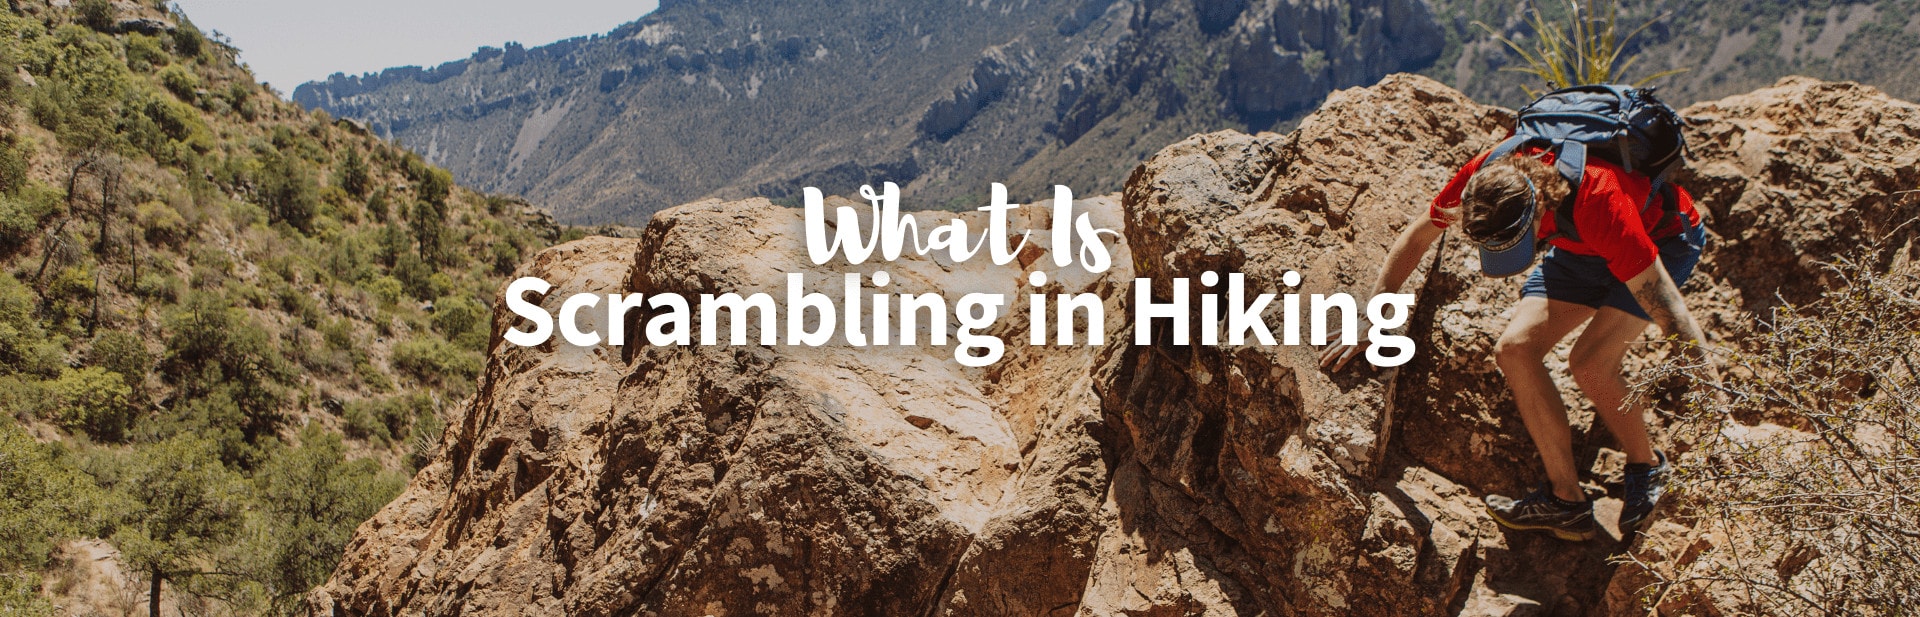 Scrambling in Hiking: A Beginner’s Guide